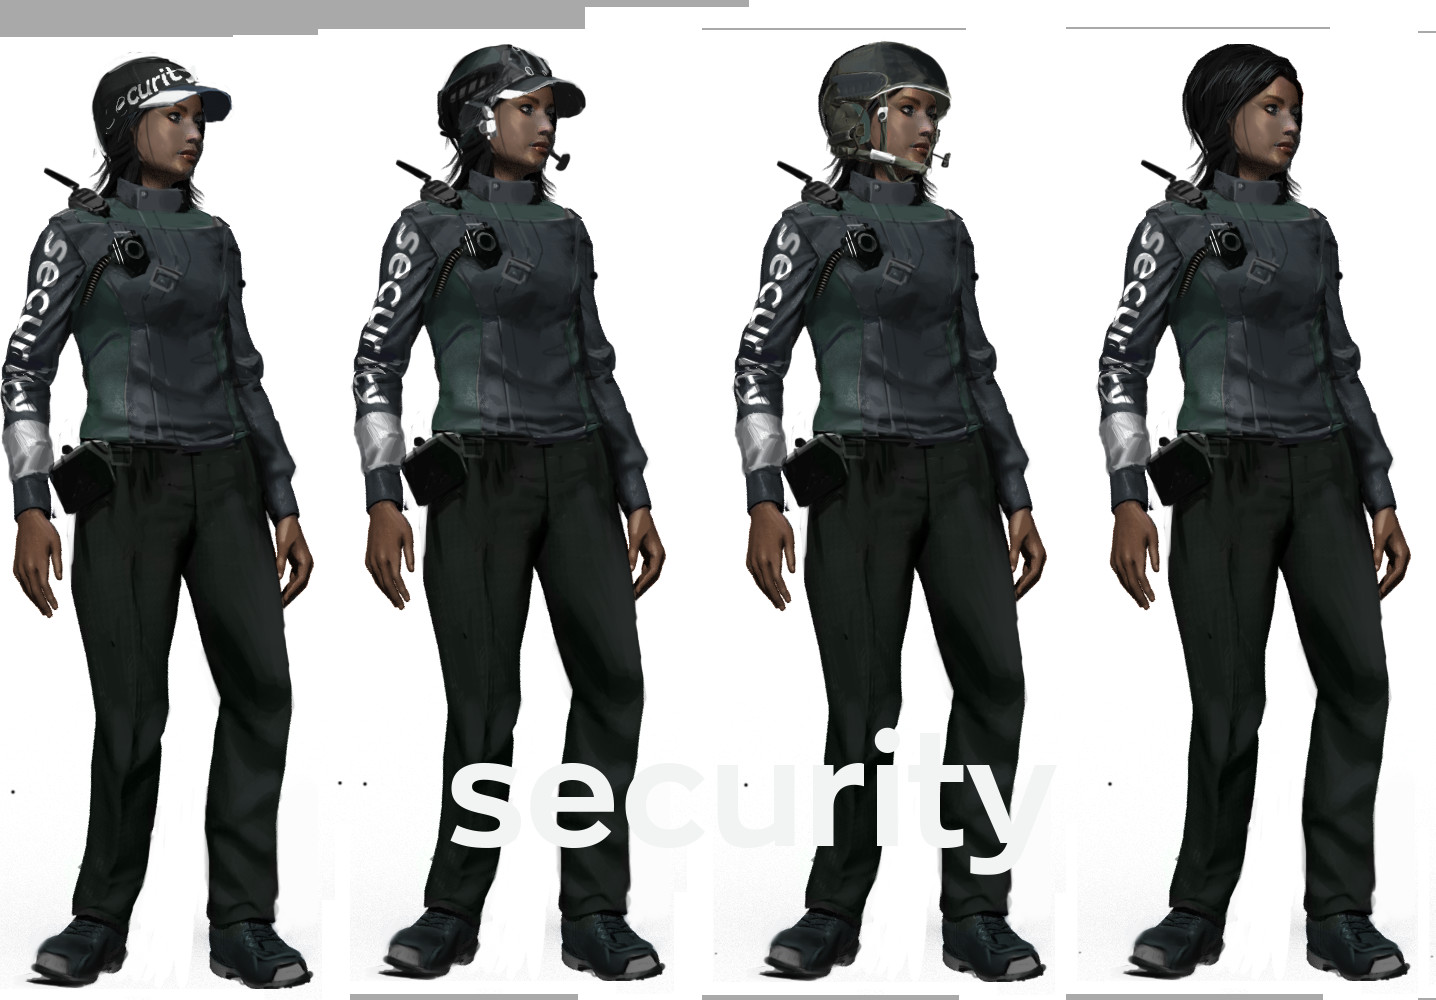 Security Guard headgear variants